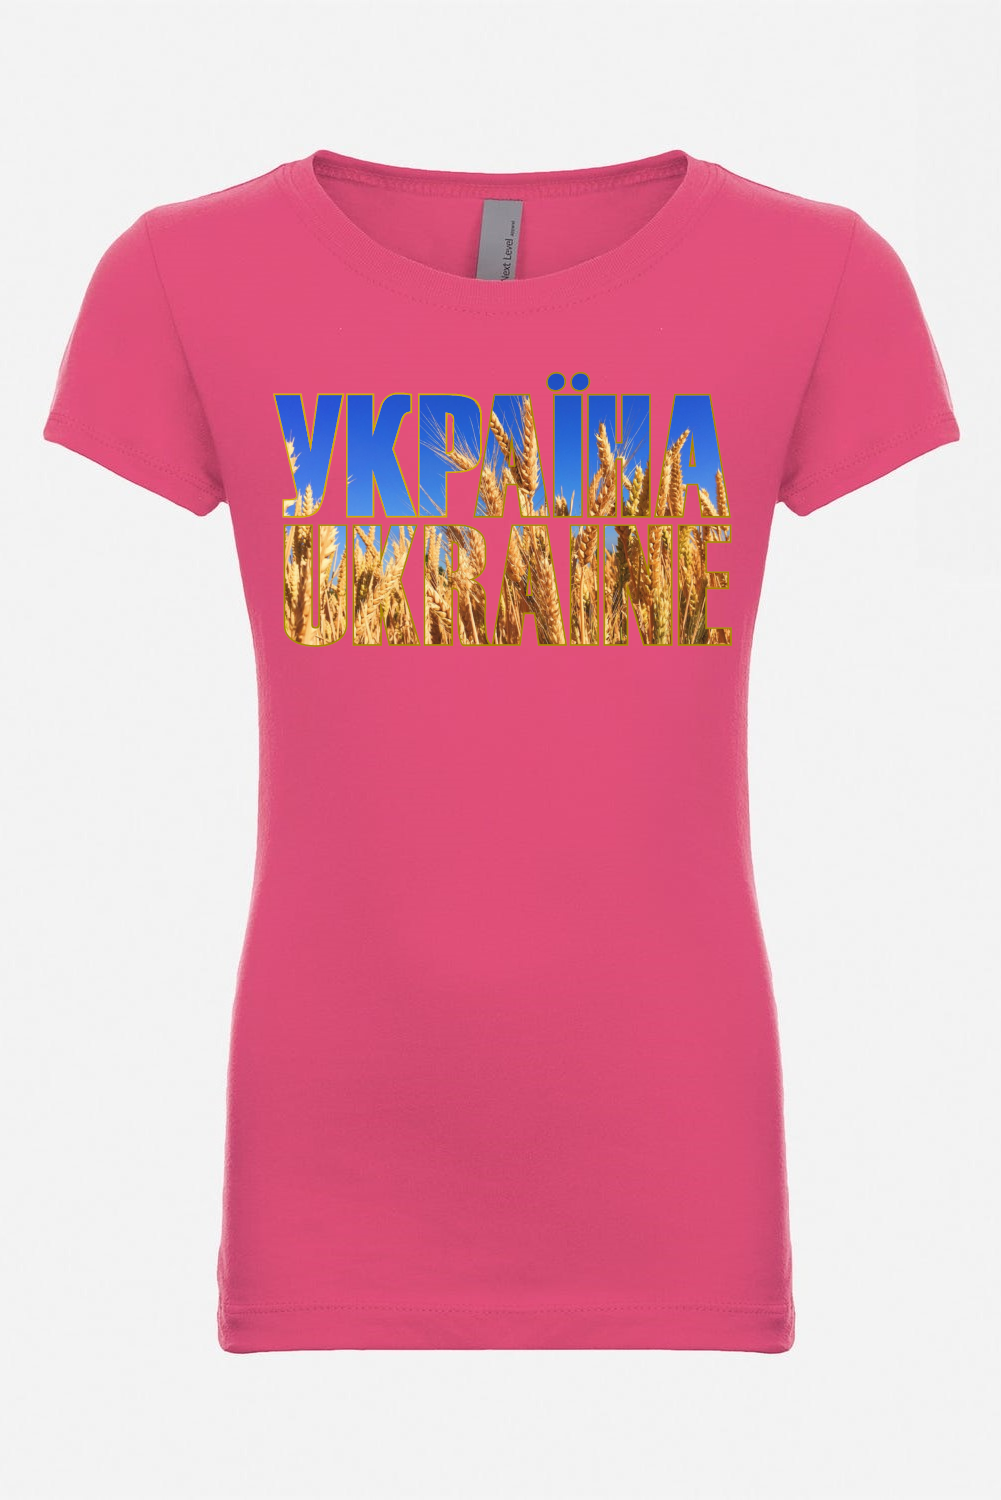 Girl's t-shirt "Україна Ukraine"